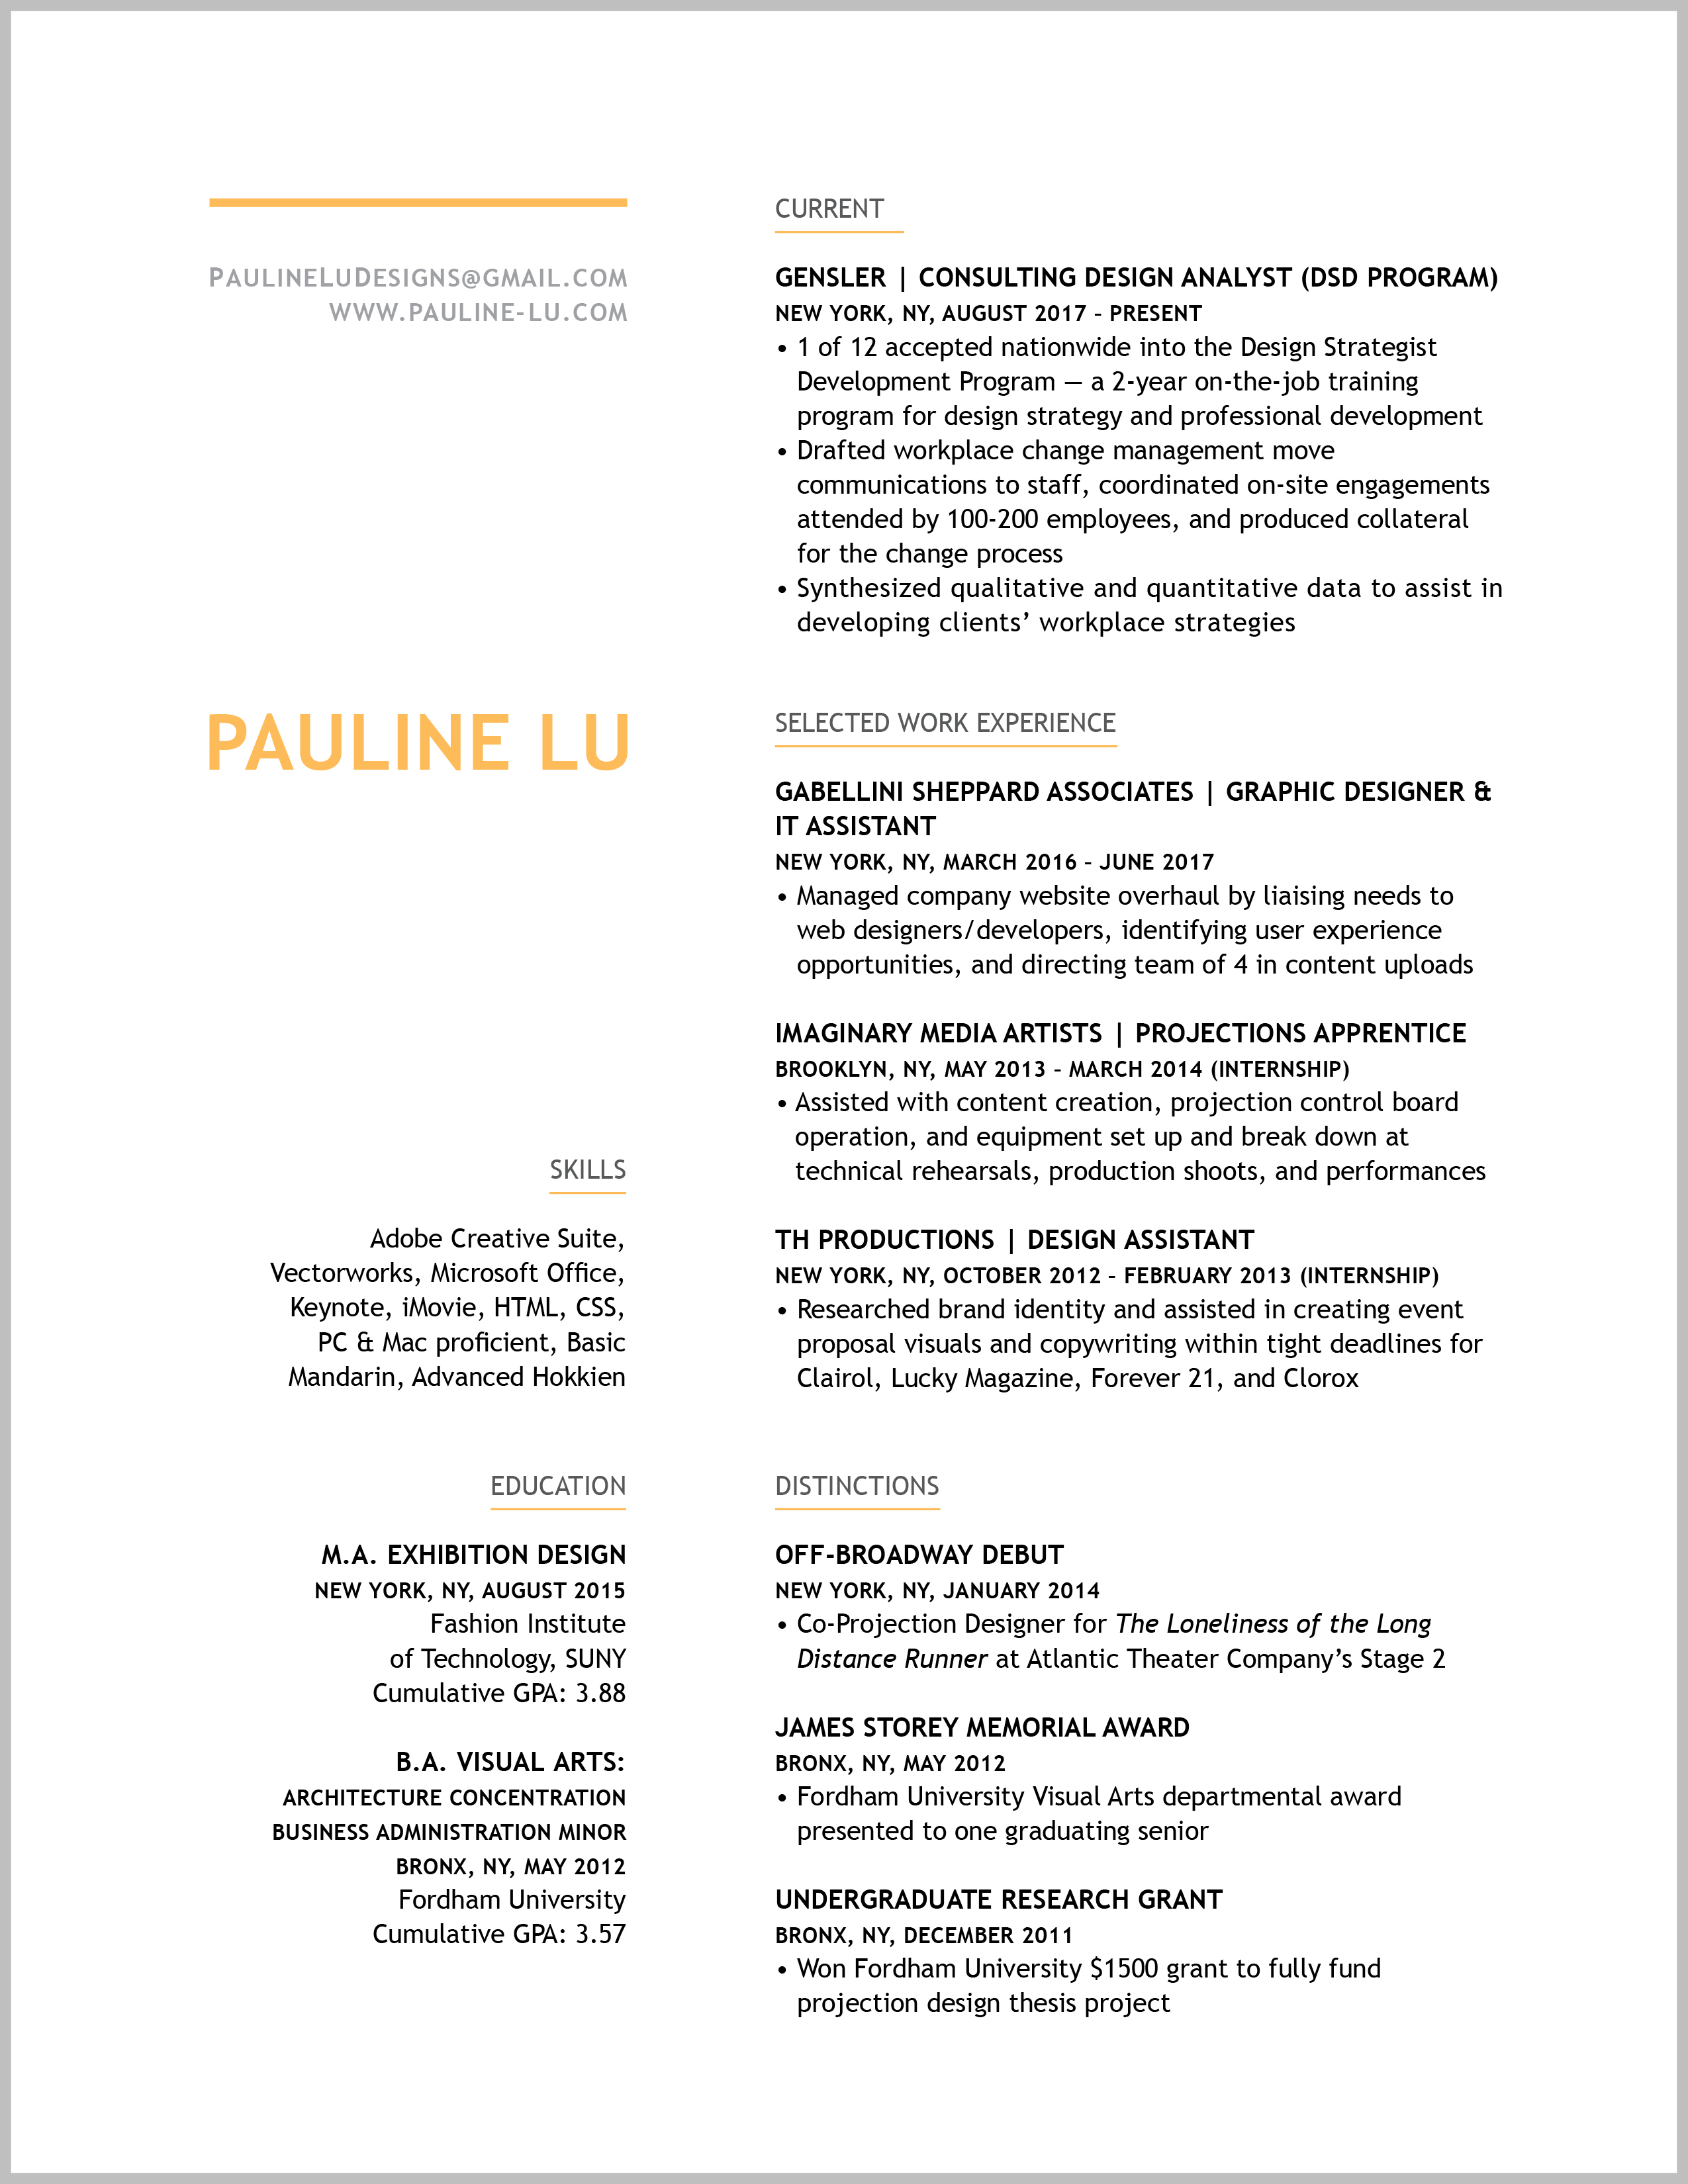 Image of Pauline Lu's Resume